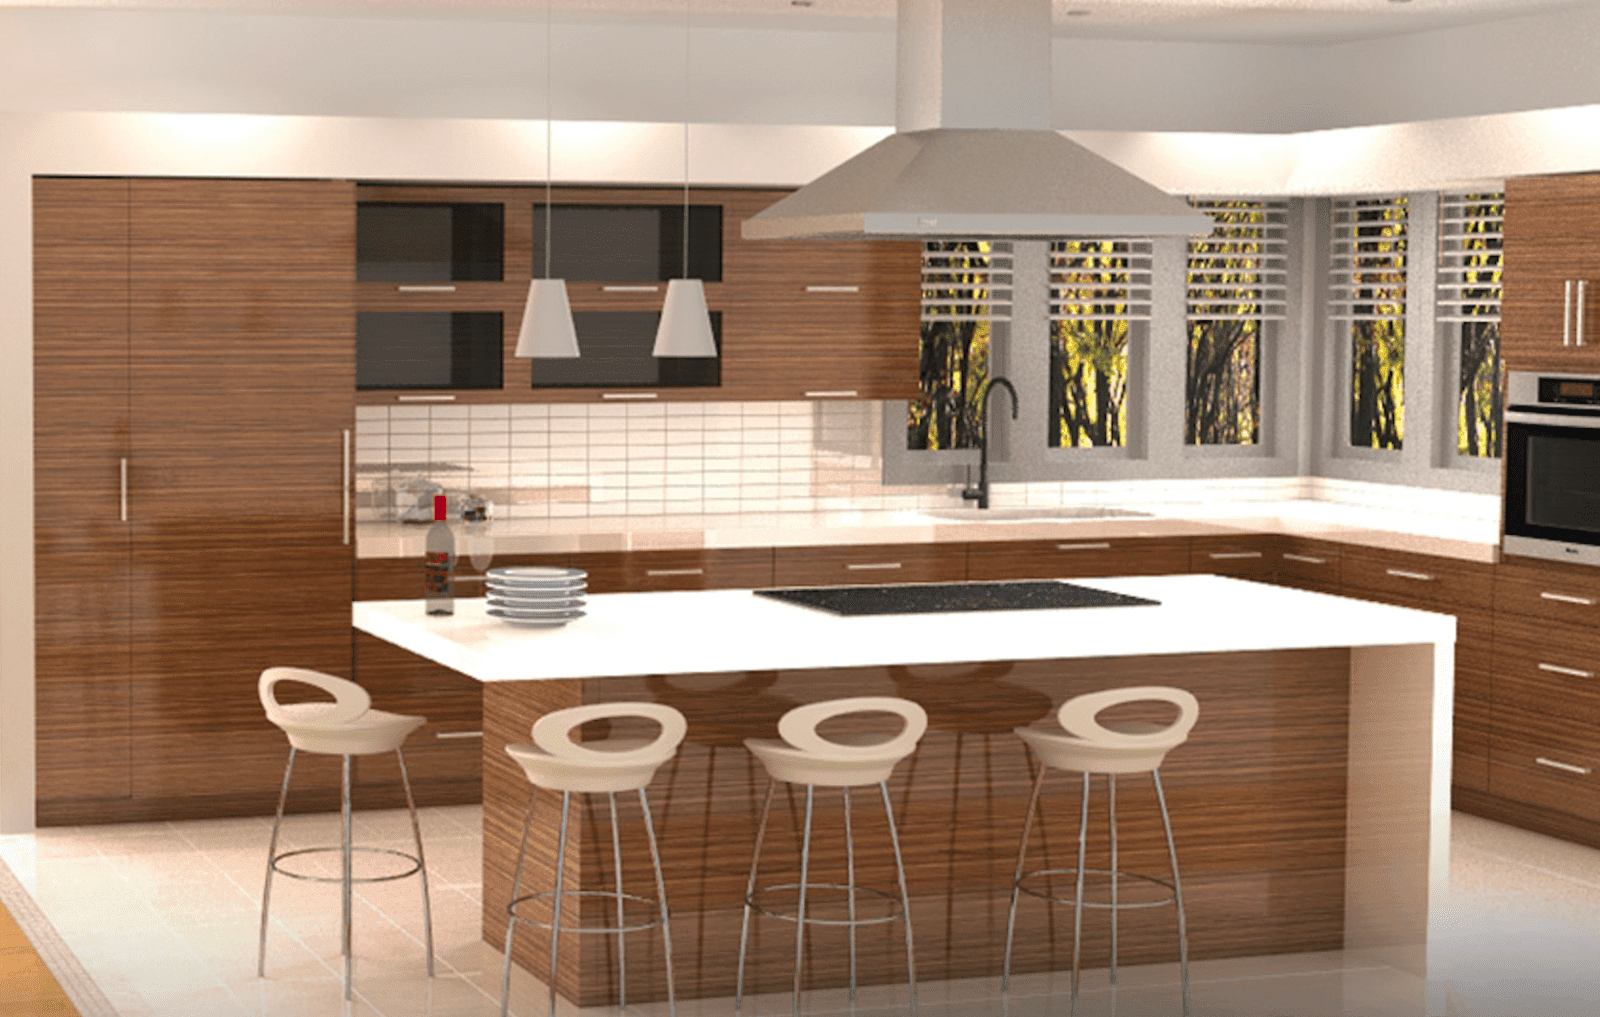 2020 Kitchen Design & Drafting